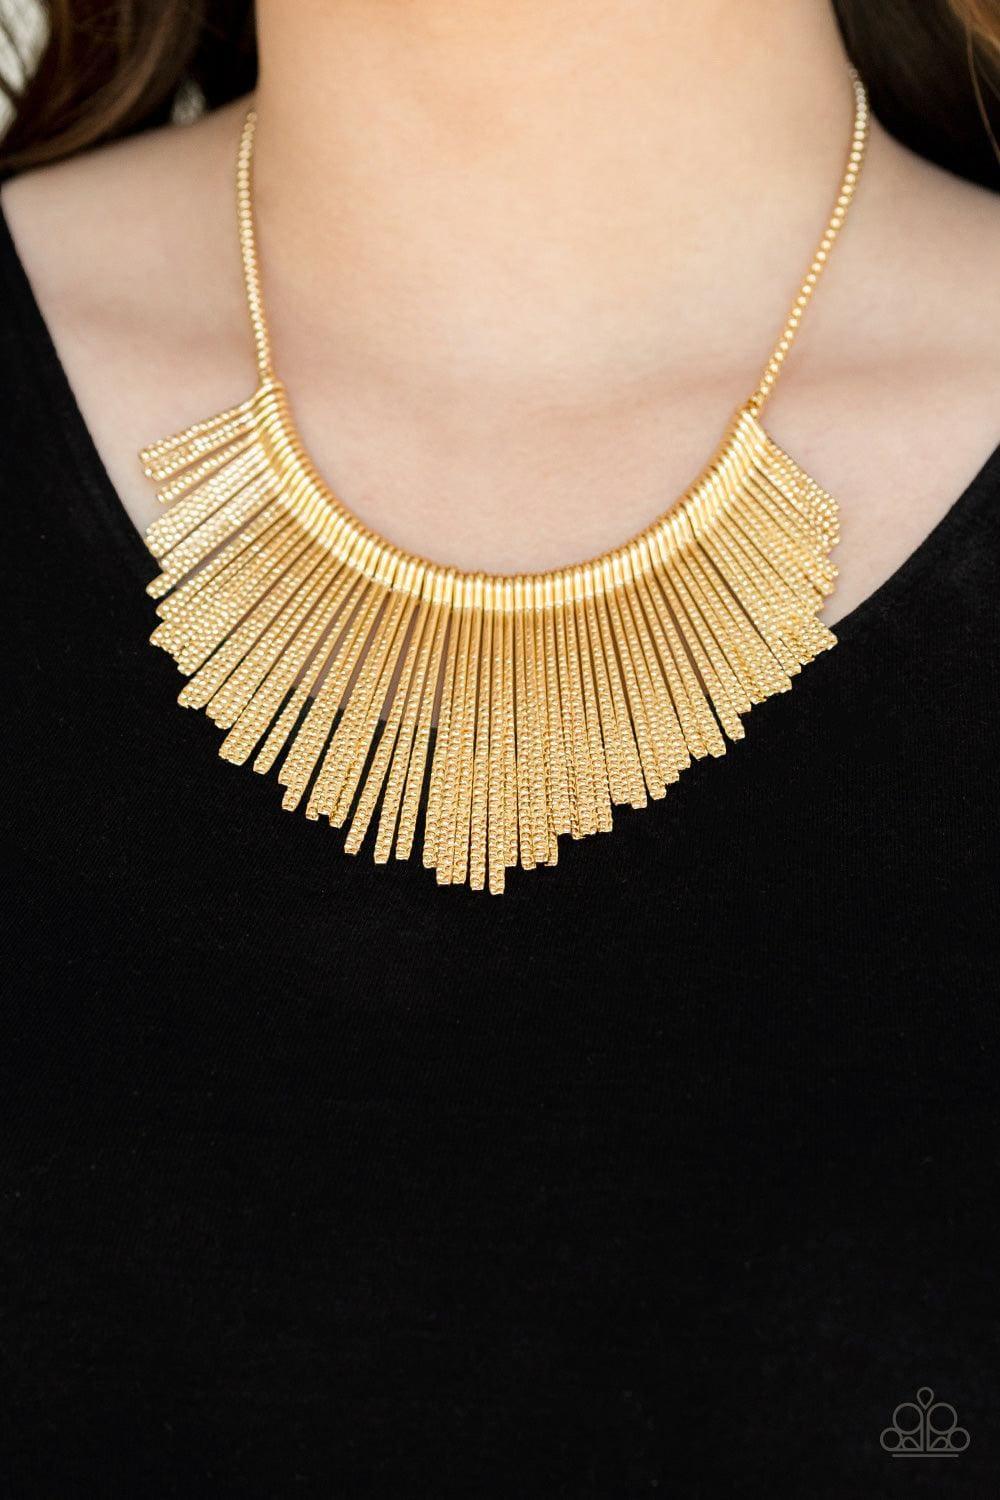 Paparazzi Accessories - Metallic Mane - Gold Necklace - Bling by JessieK